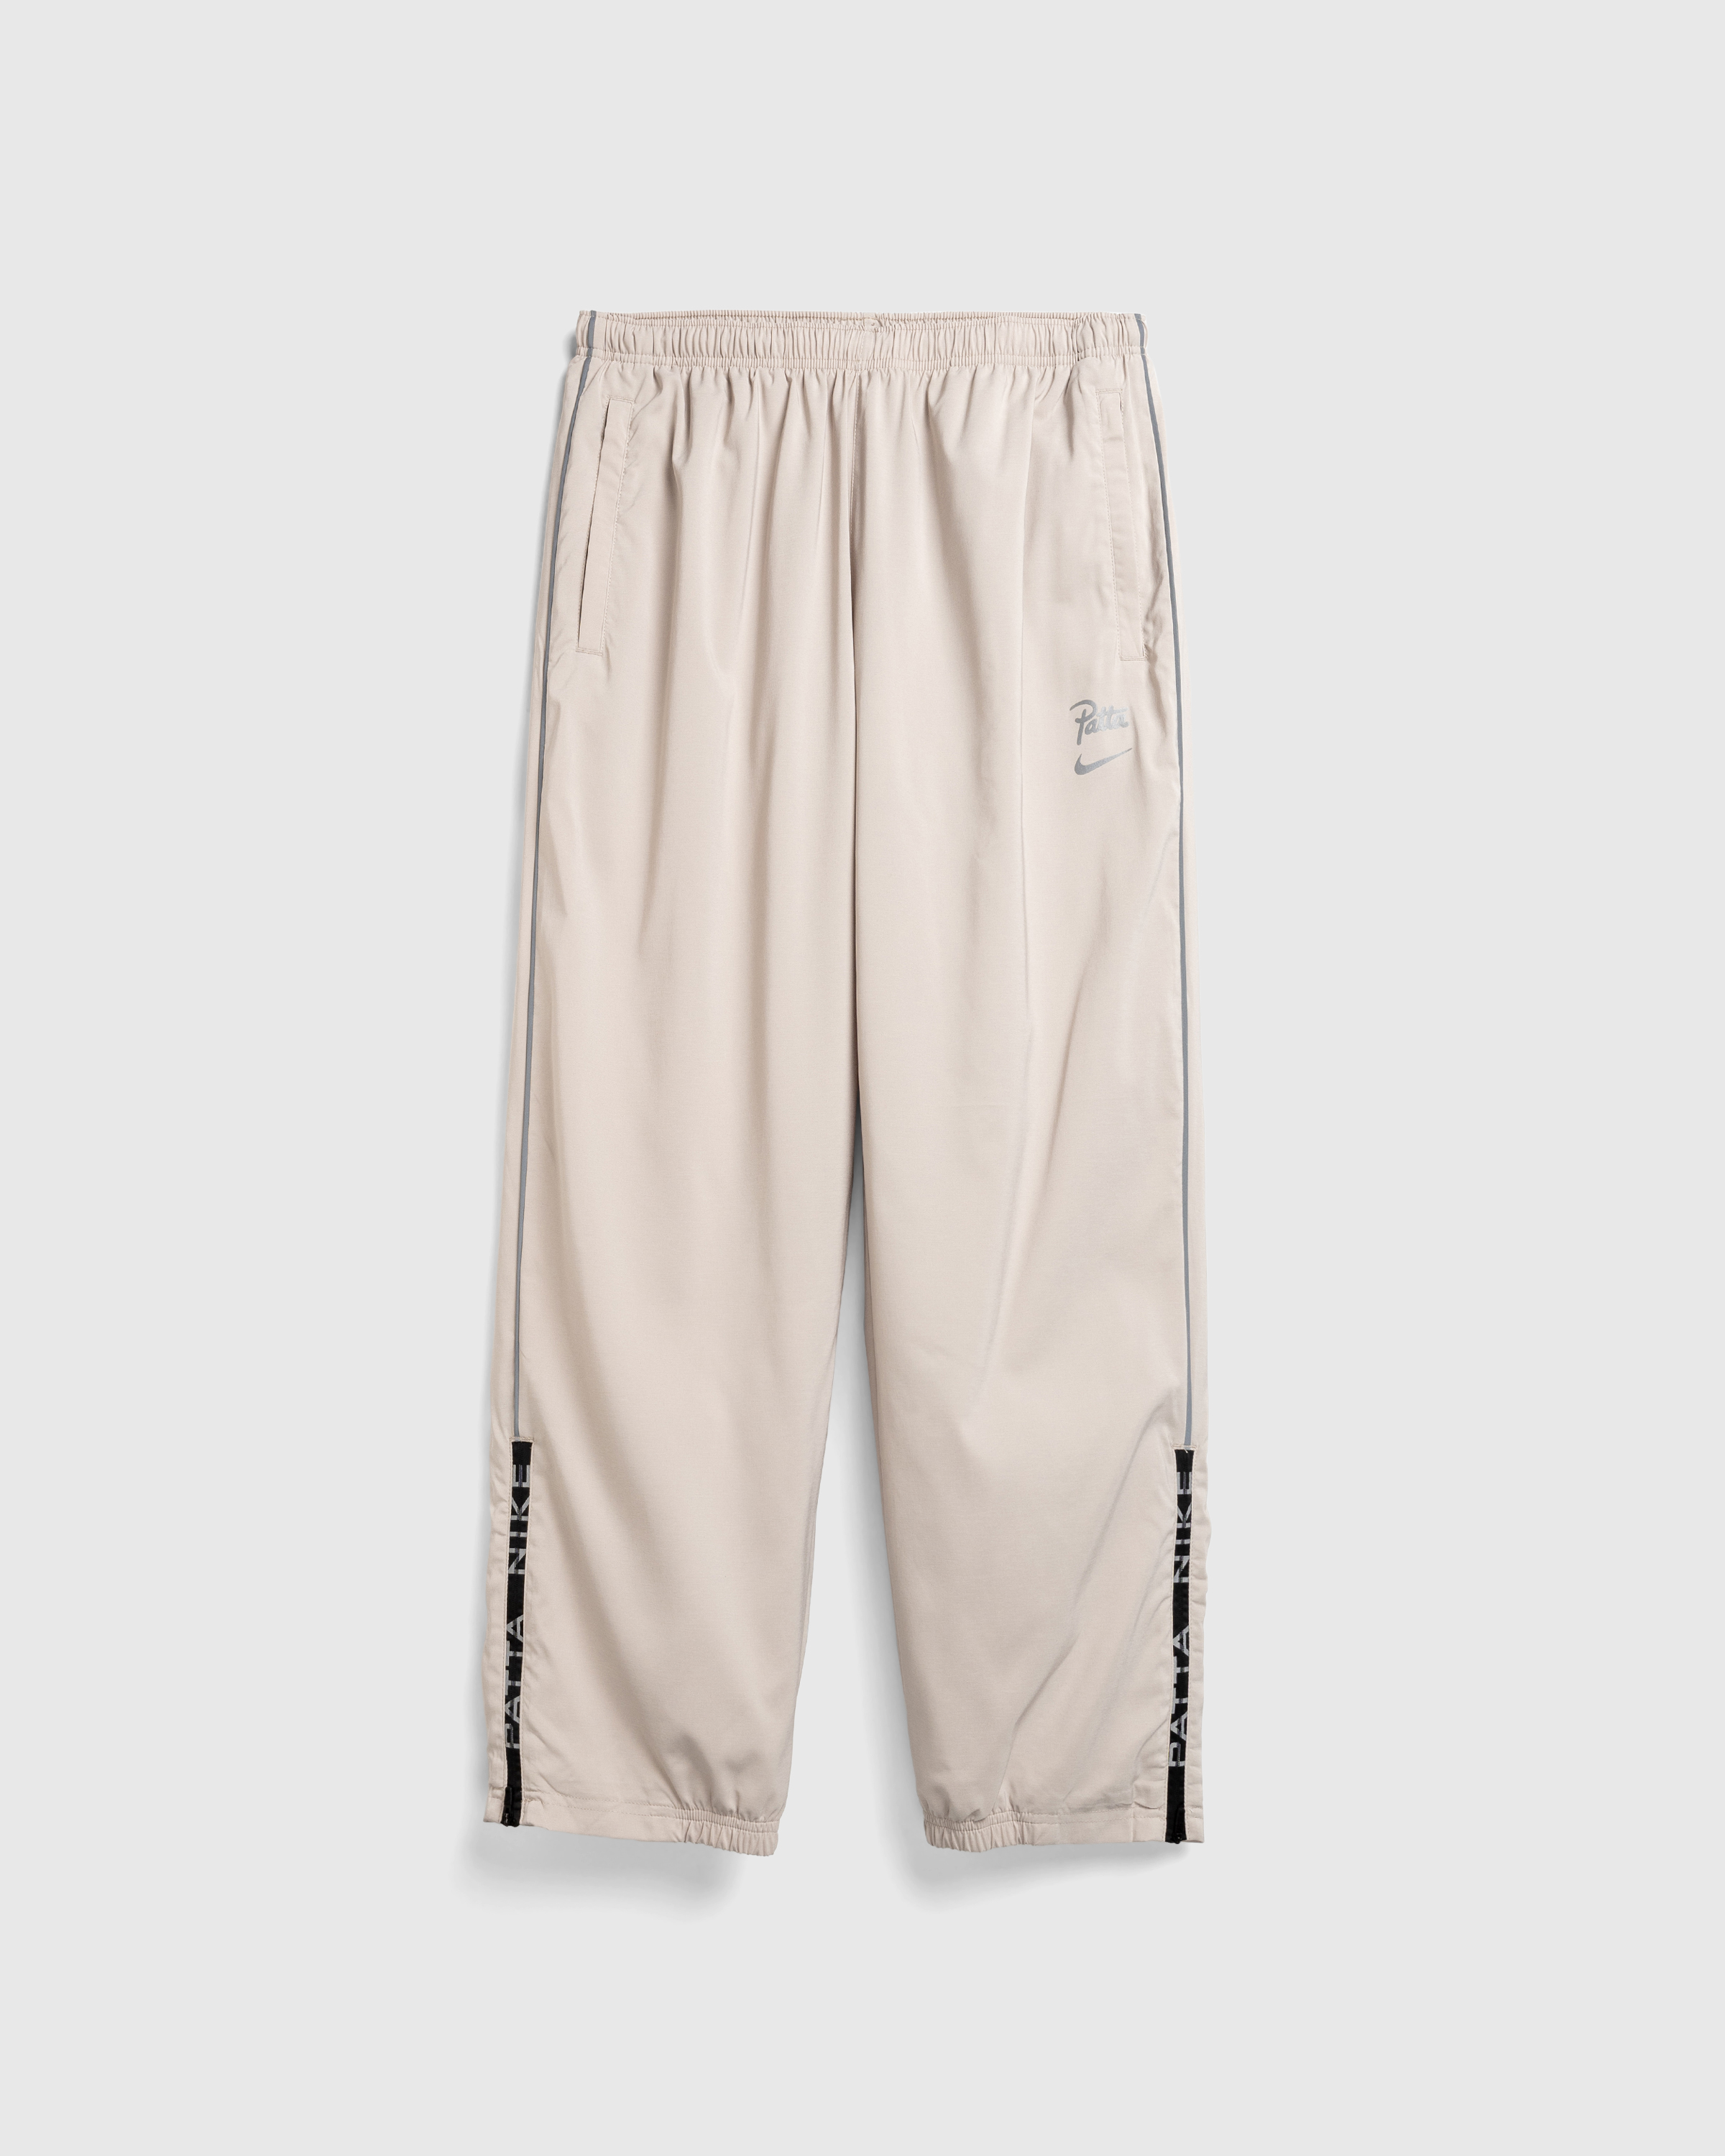 Nike x Patta – Men's Track Pants Sanddrift/Cream II - Track Pants - White - Image 1